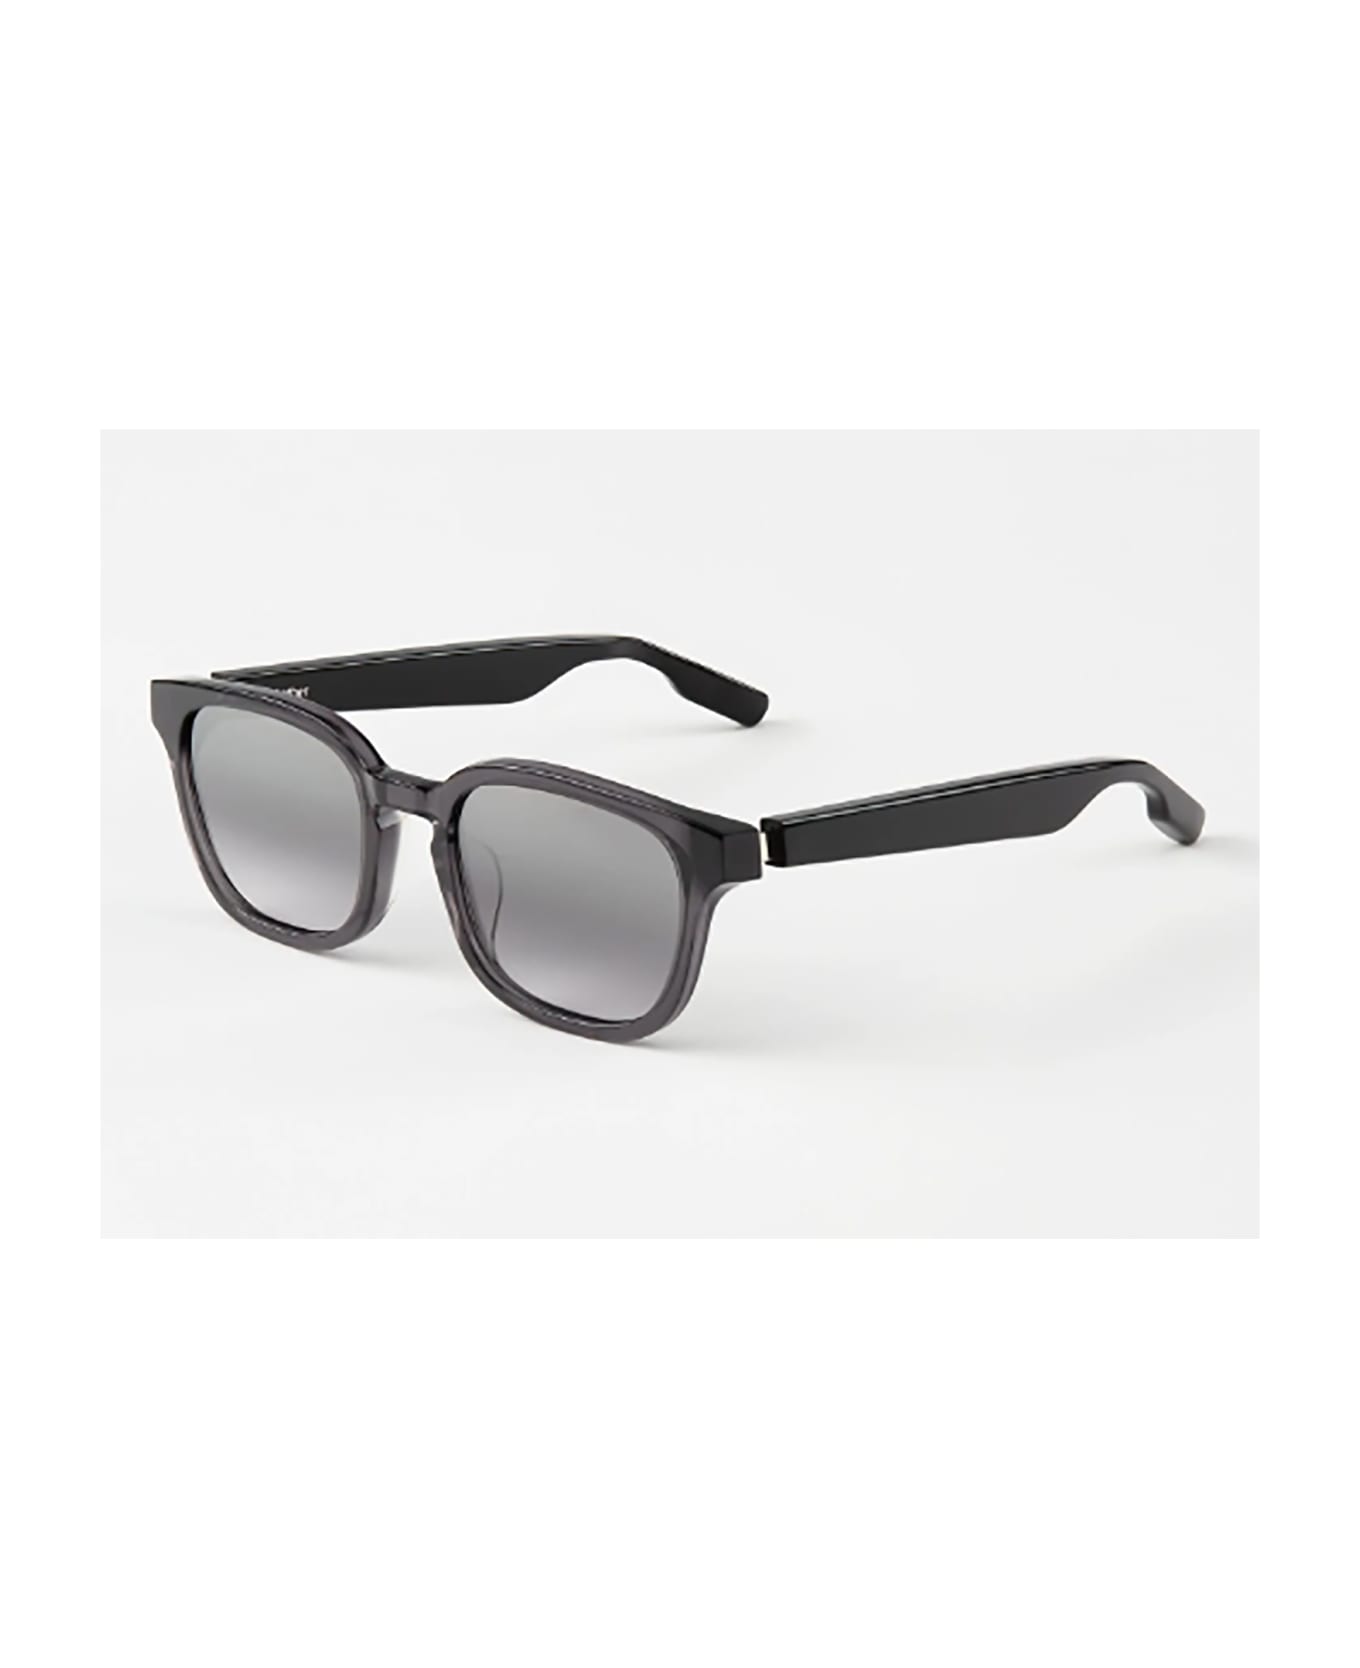 Aether S1/S Sunglasses - Black サングラス